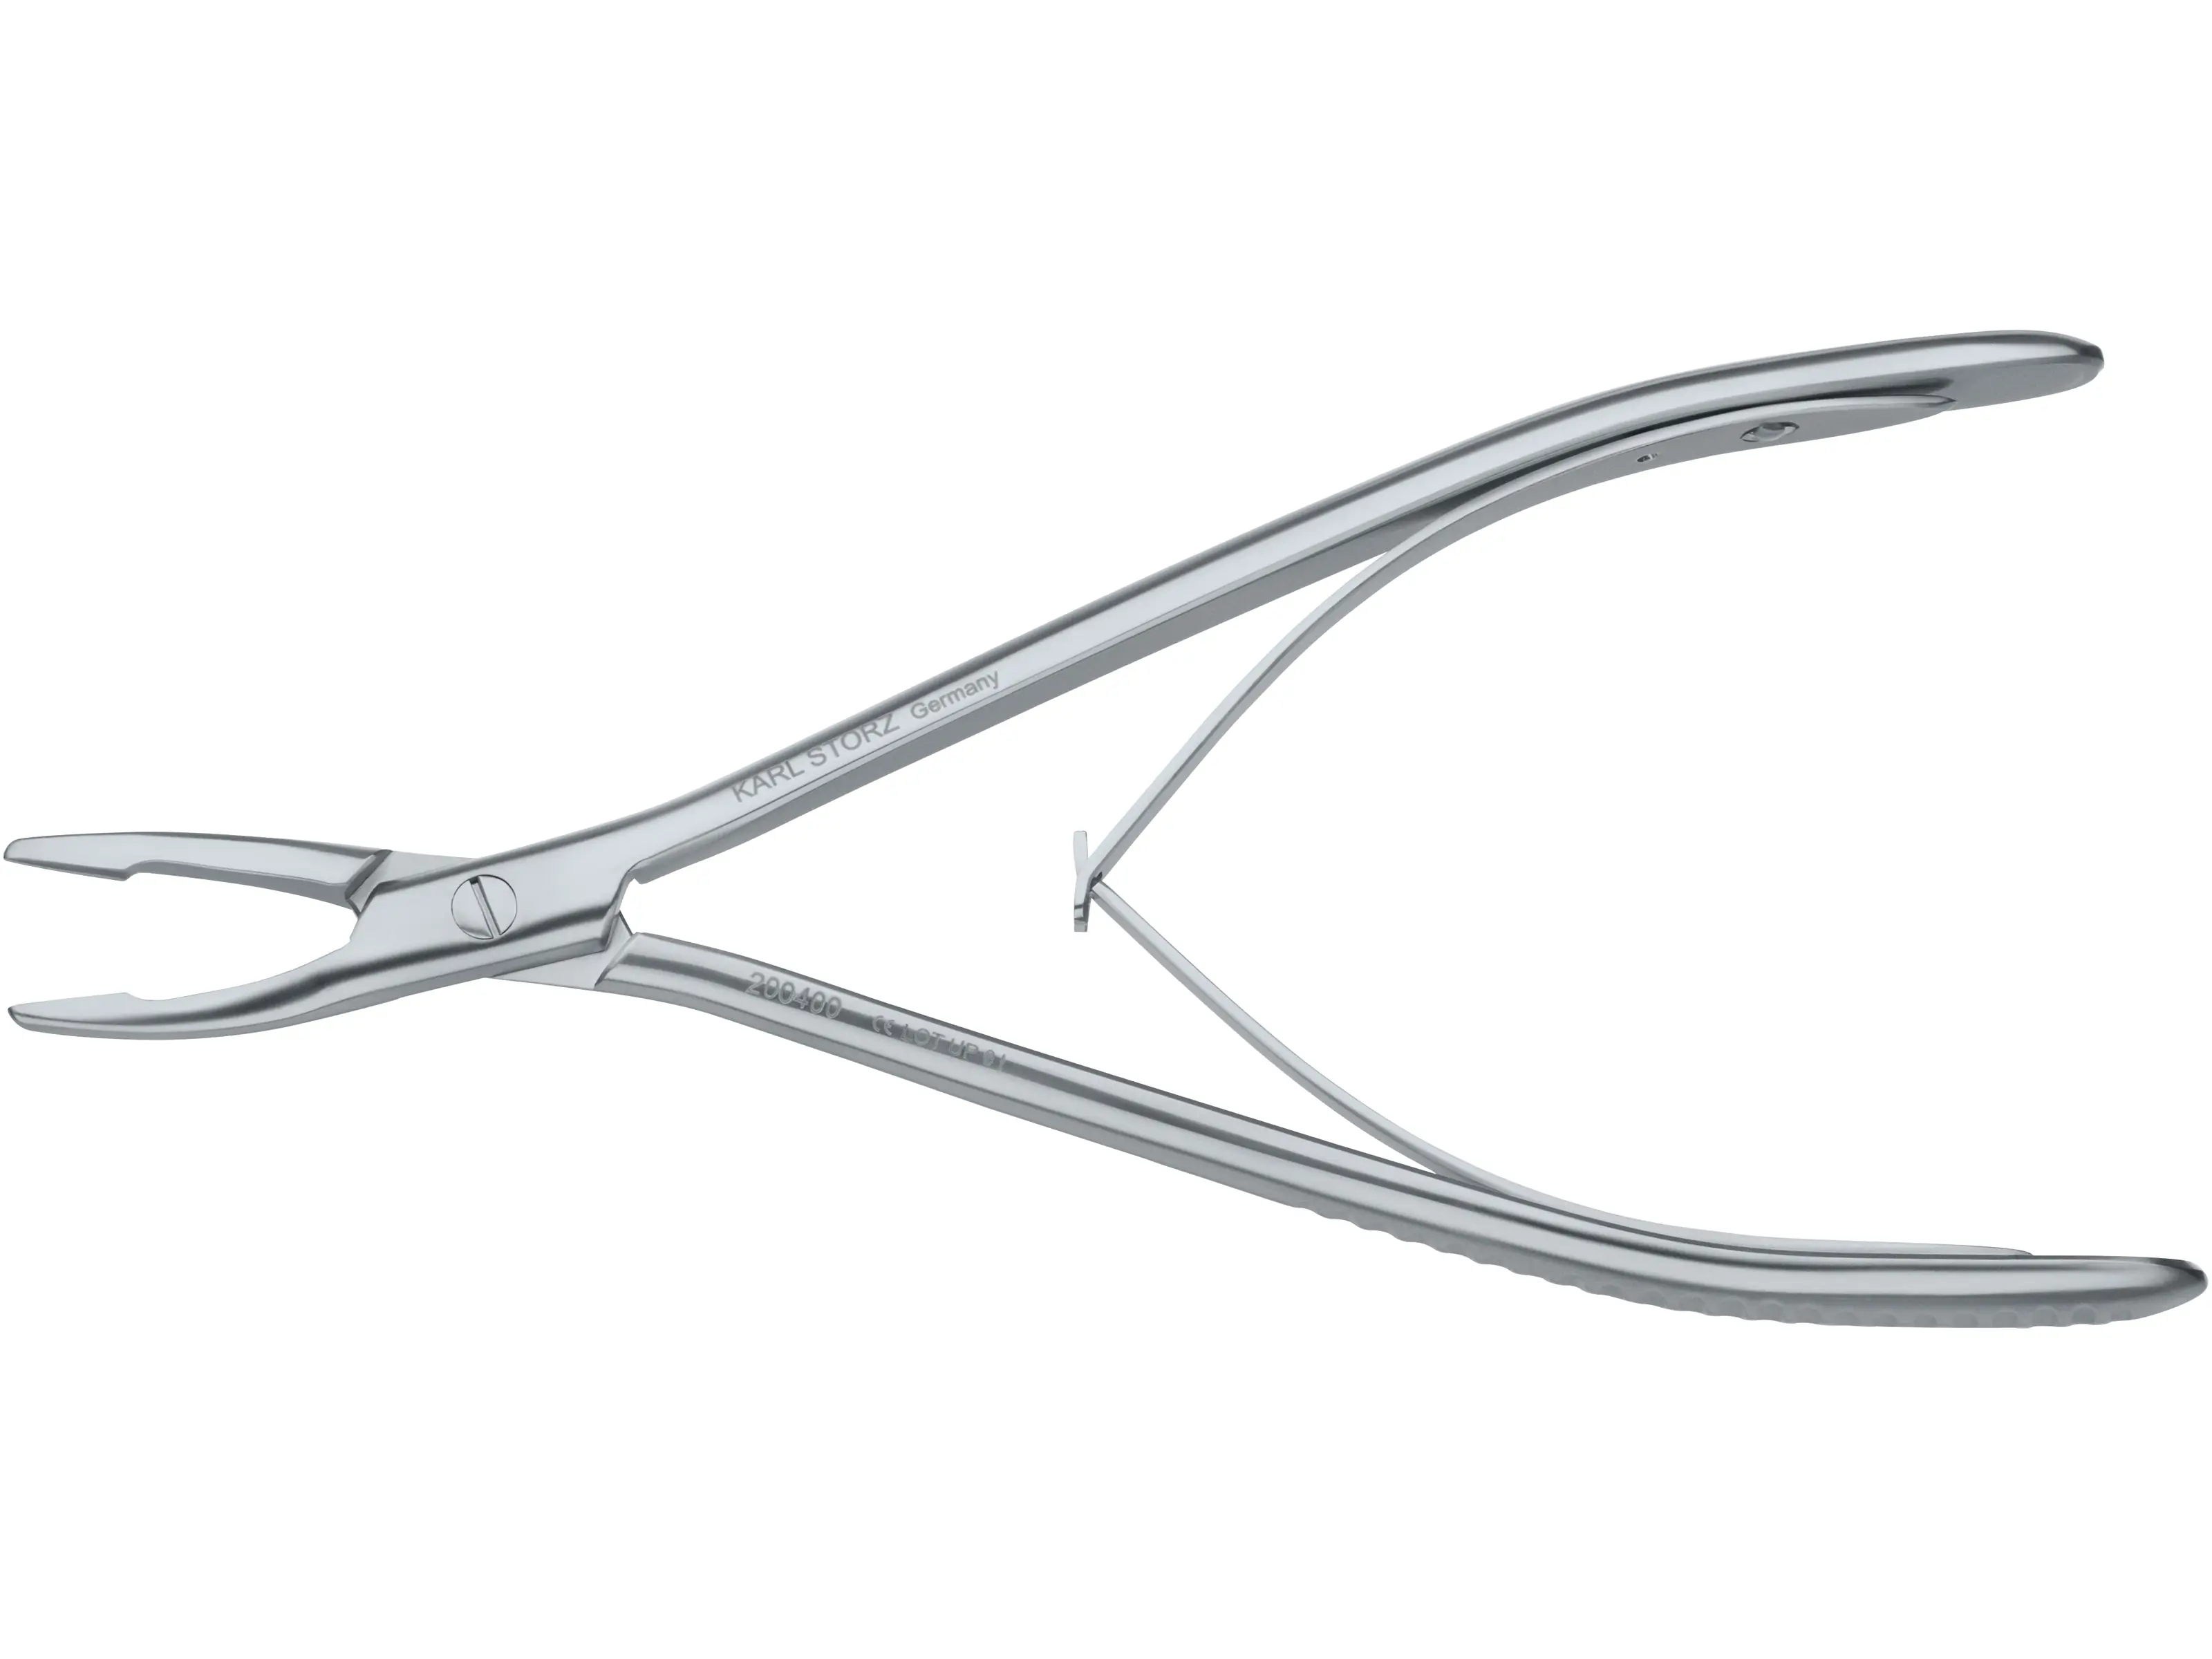 BEYER Rongeur, curved, 17 cm | KARL STORZ Endoskope | Singapore